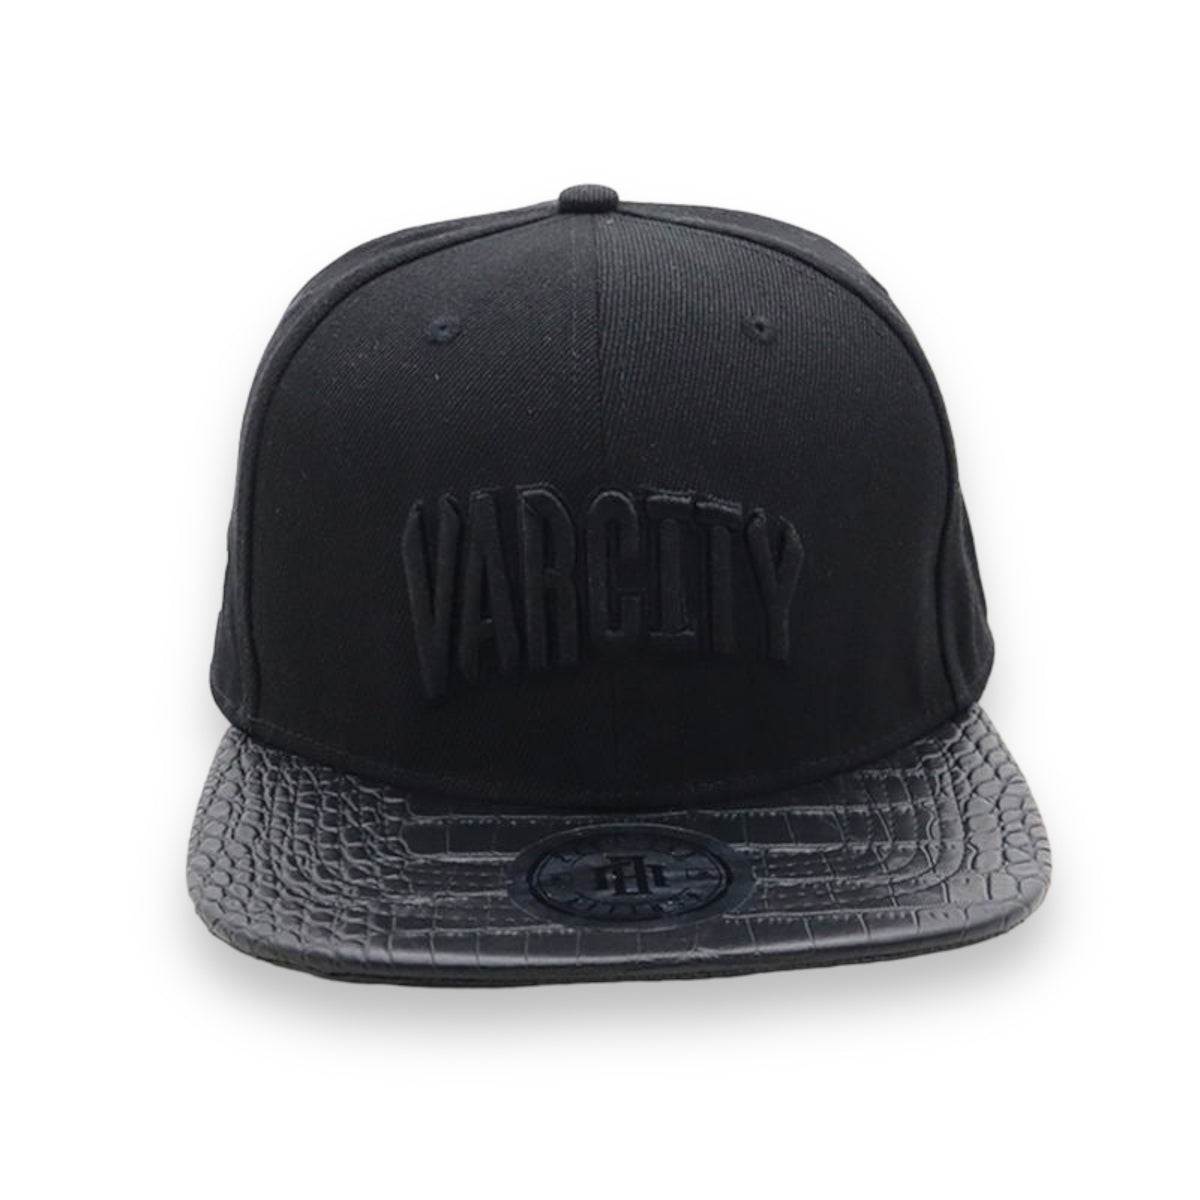 Signature Varcity ® Crocodile Brim Adjustable Cap Black